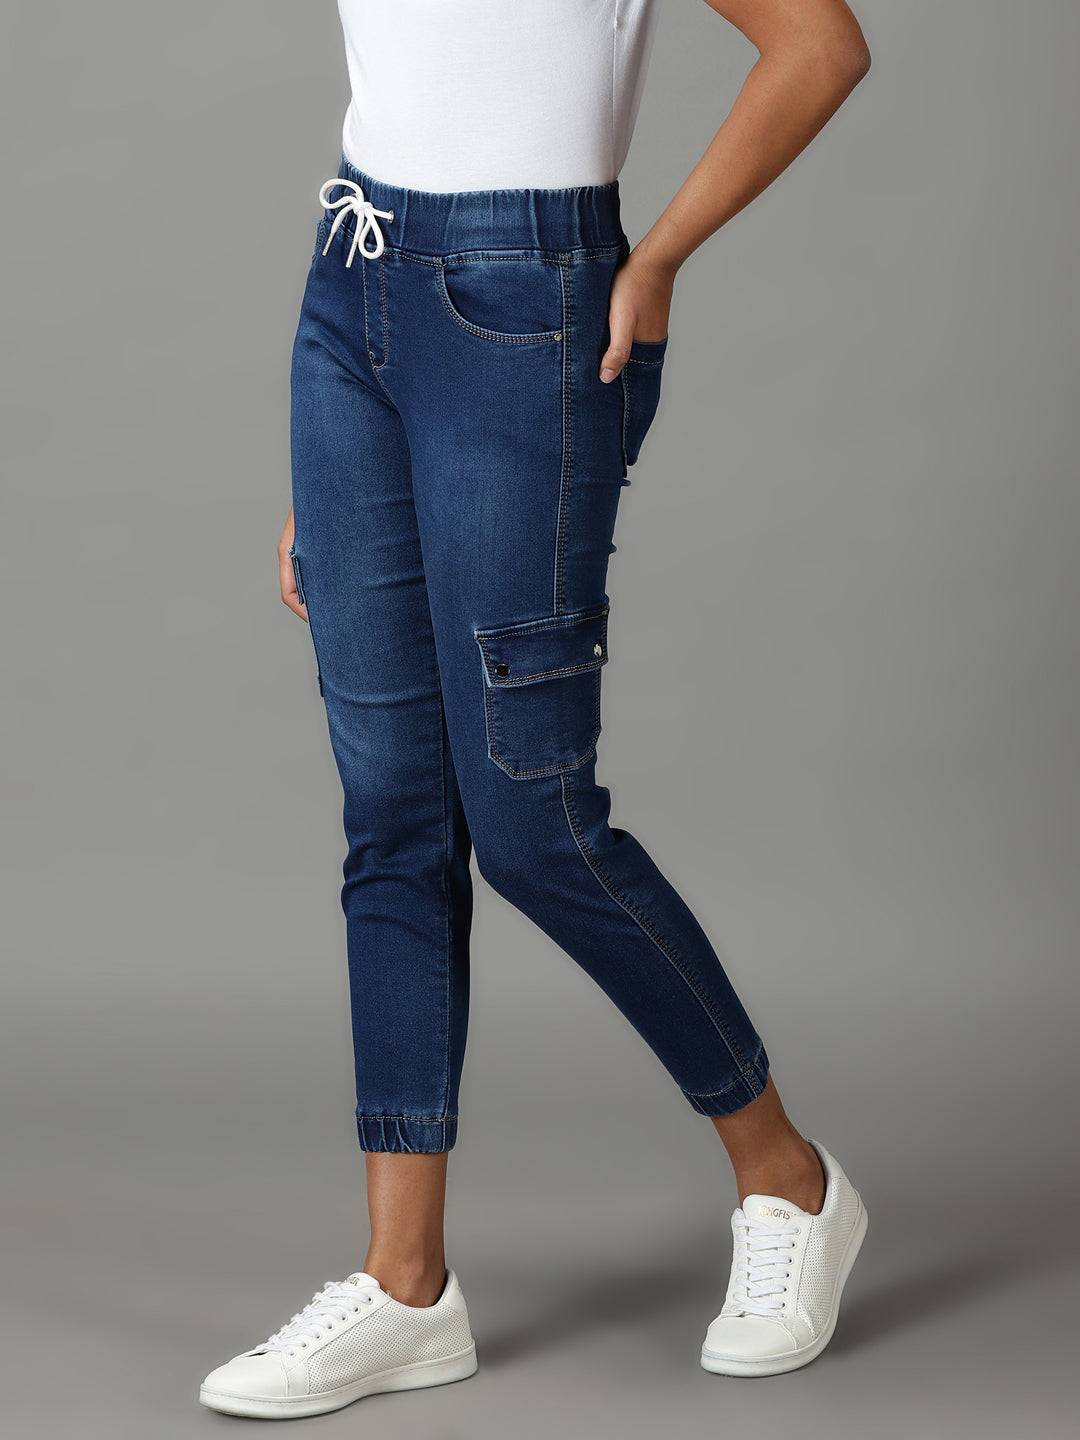 Women's Navy Blue Solid Jogger Denim Jeans